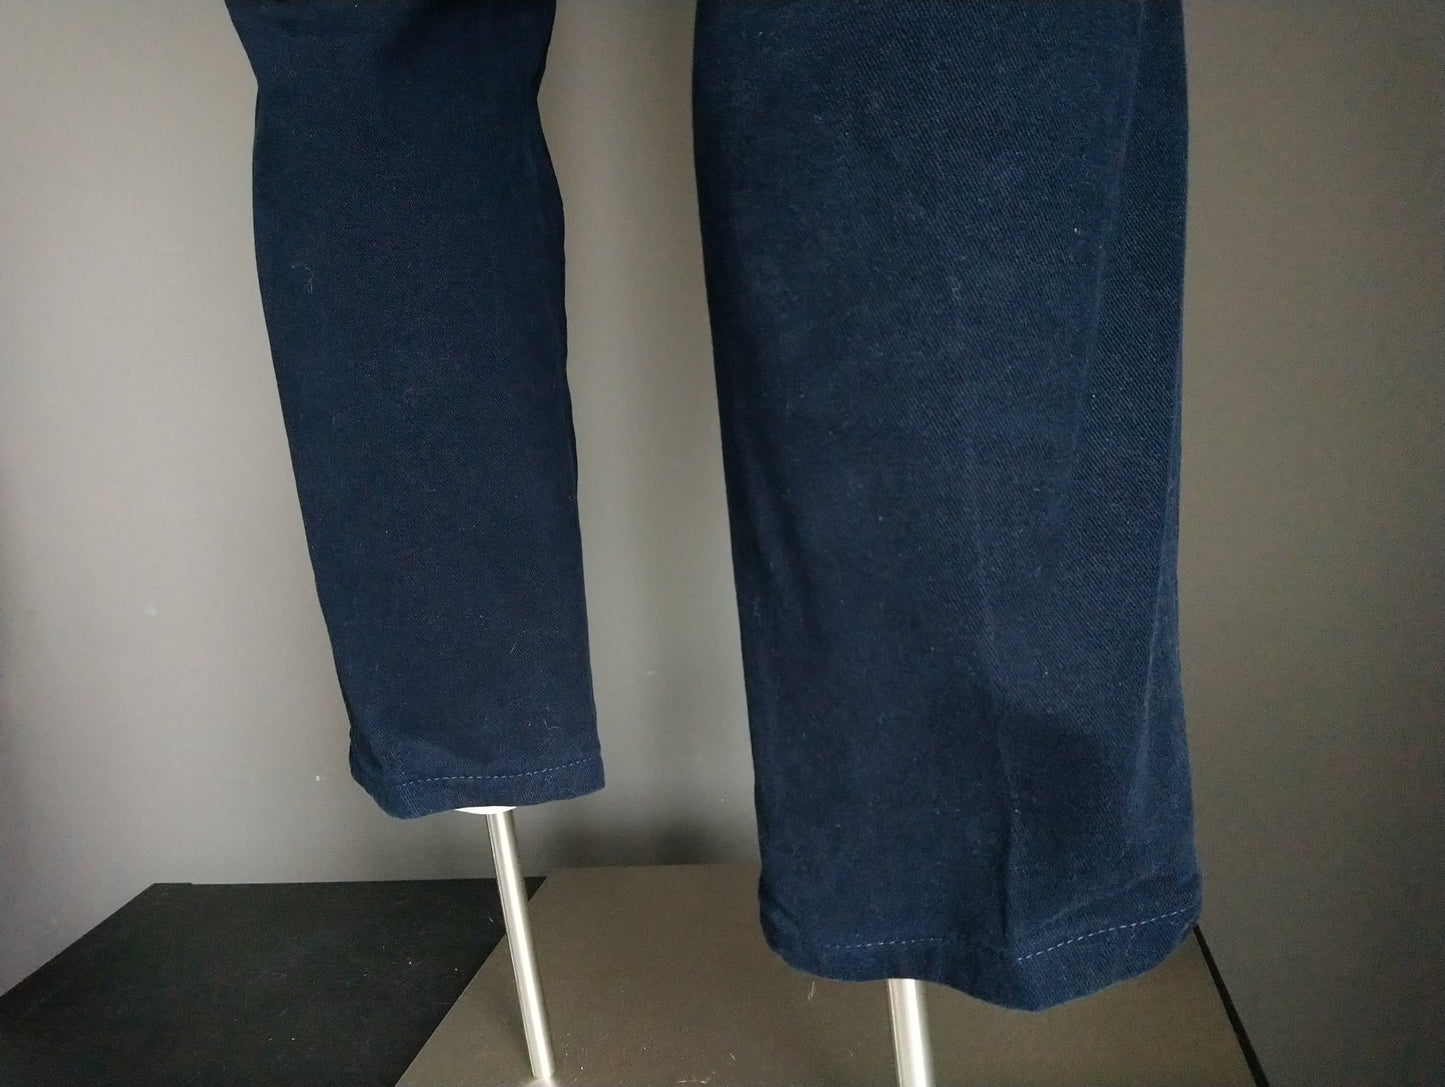 MMX broek / pantalon. Donker Blauw gekleurd. Maat 54 / XL / W36 - L30. ingekort.